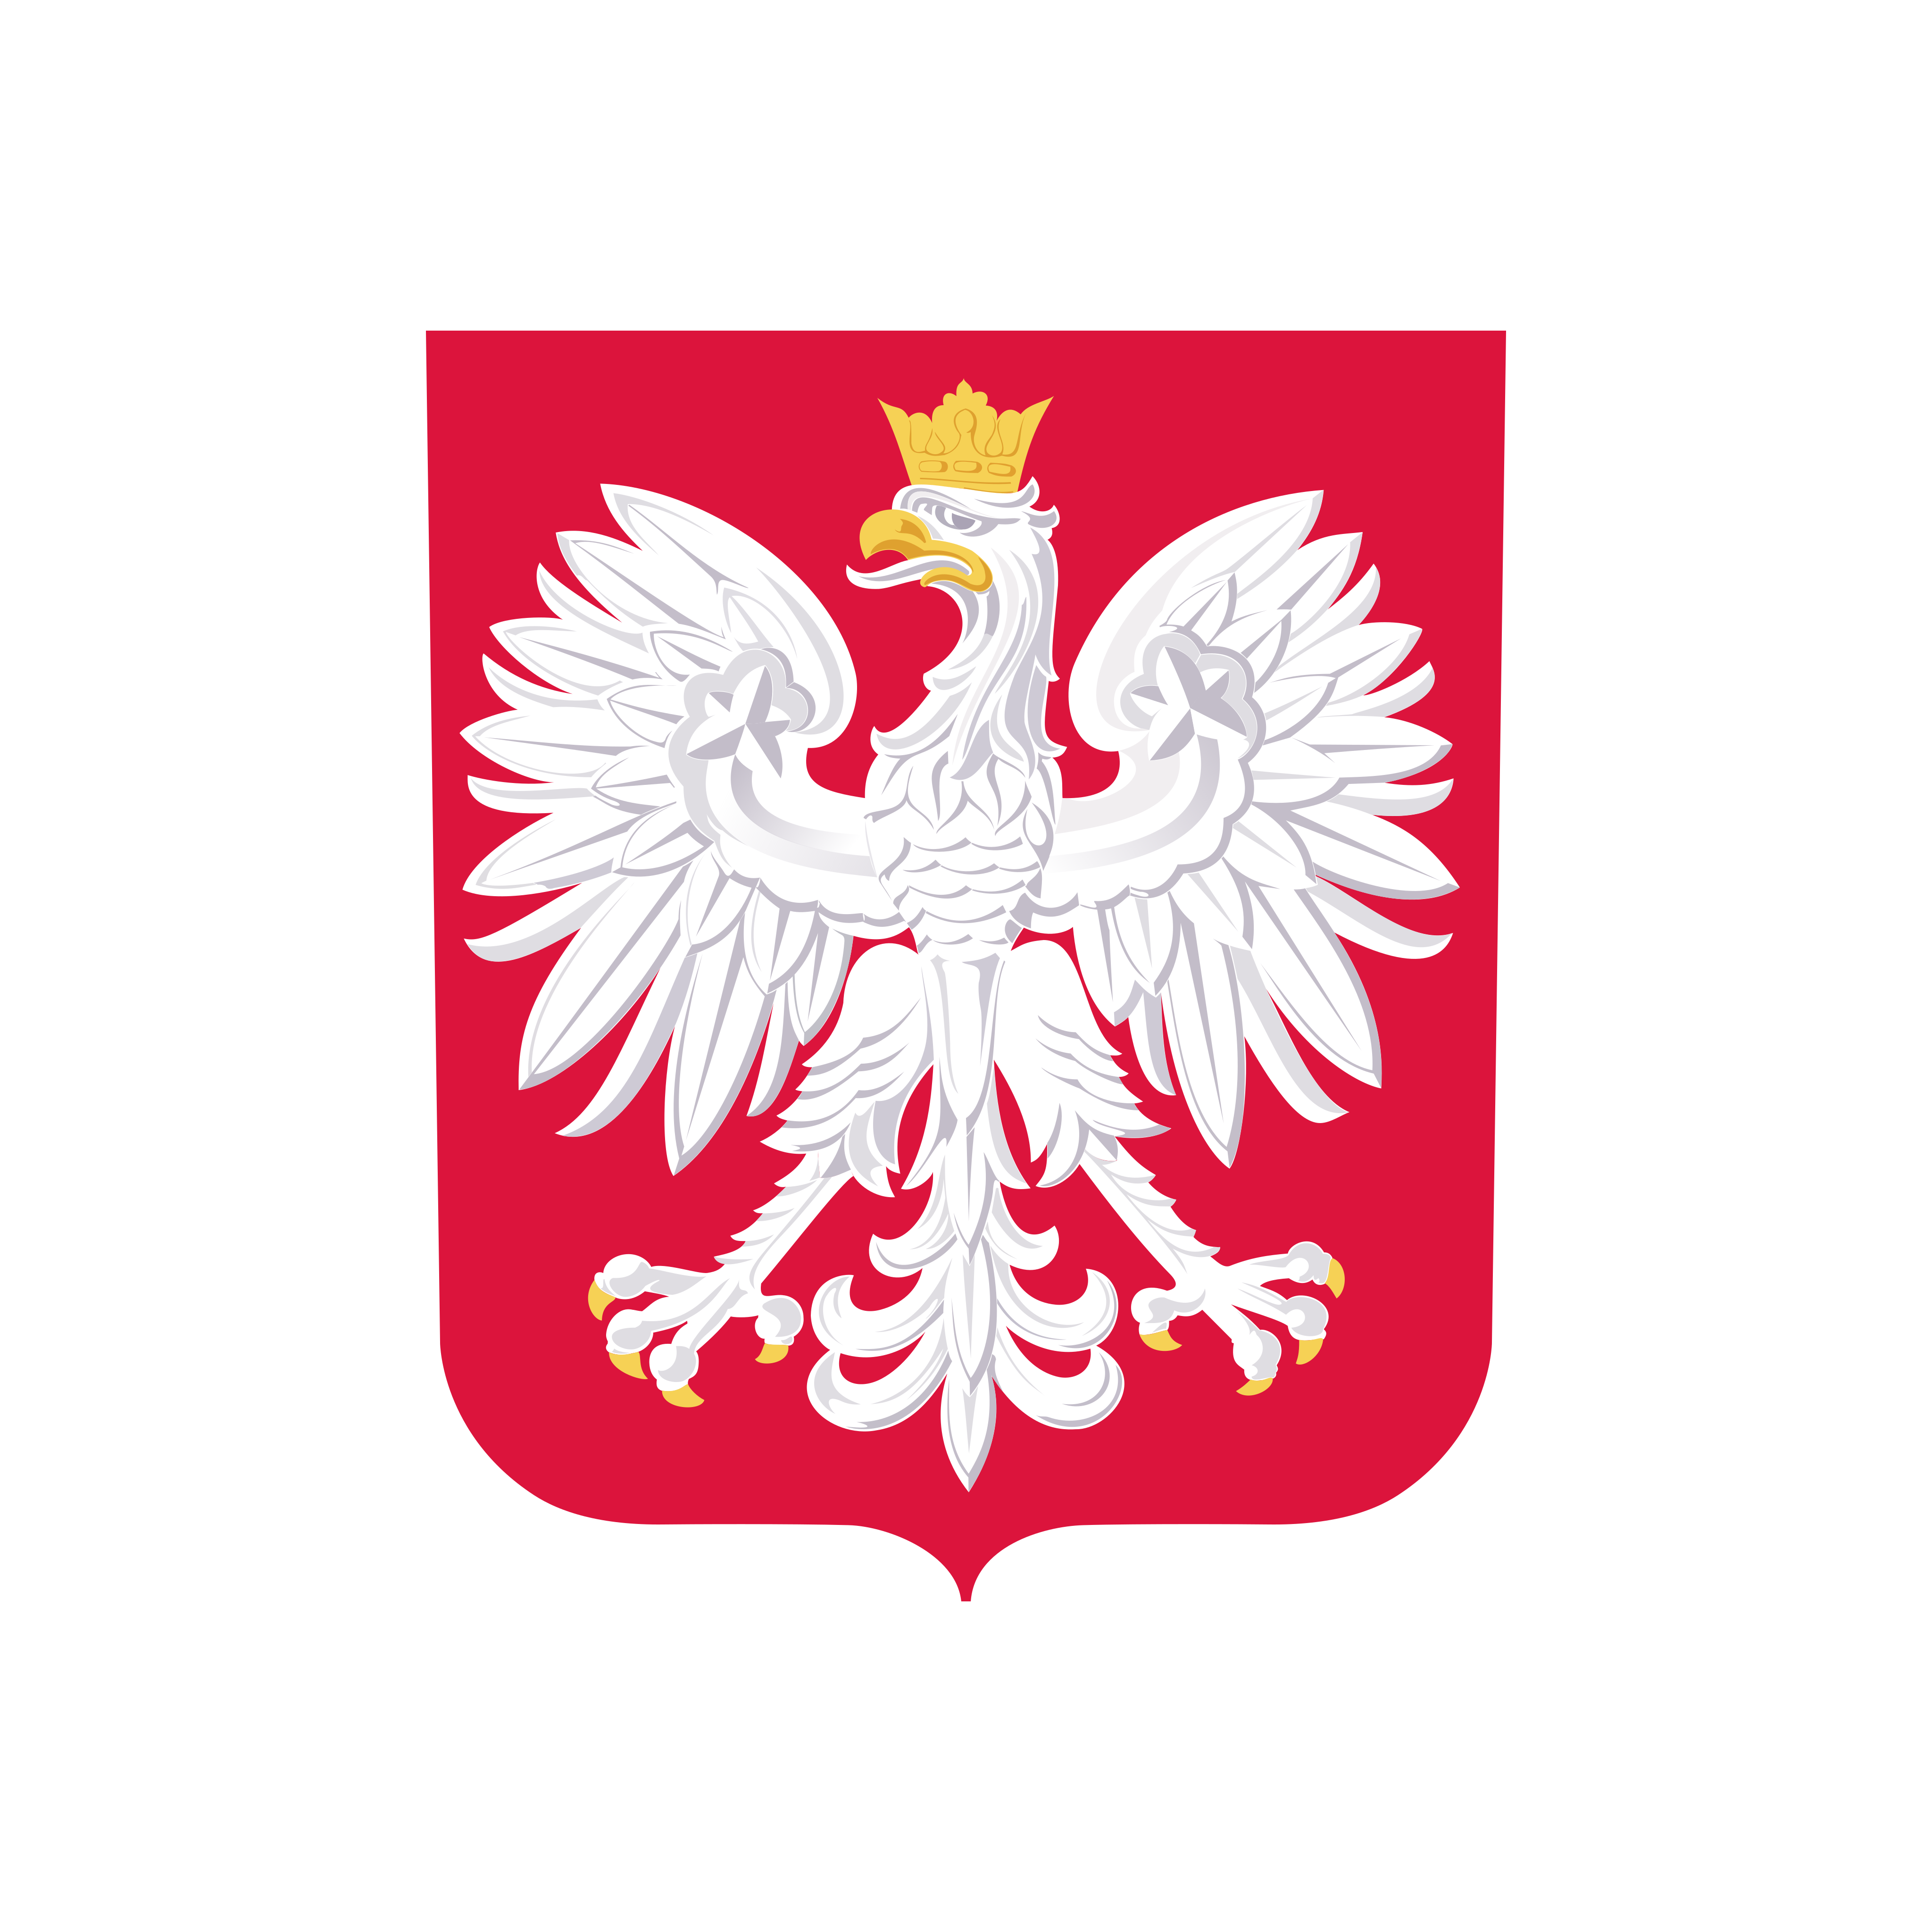 poland national football team logo 0 - Poland National Football Team Logo